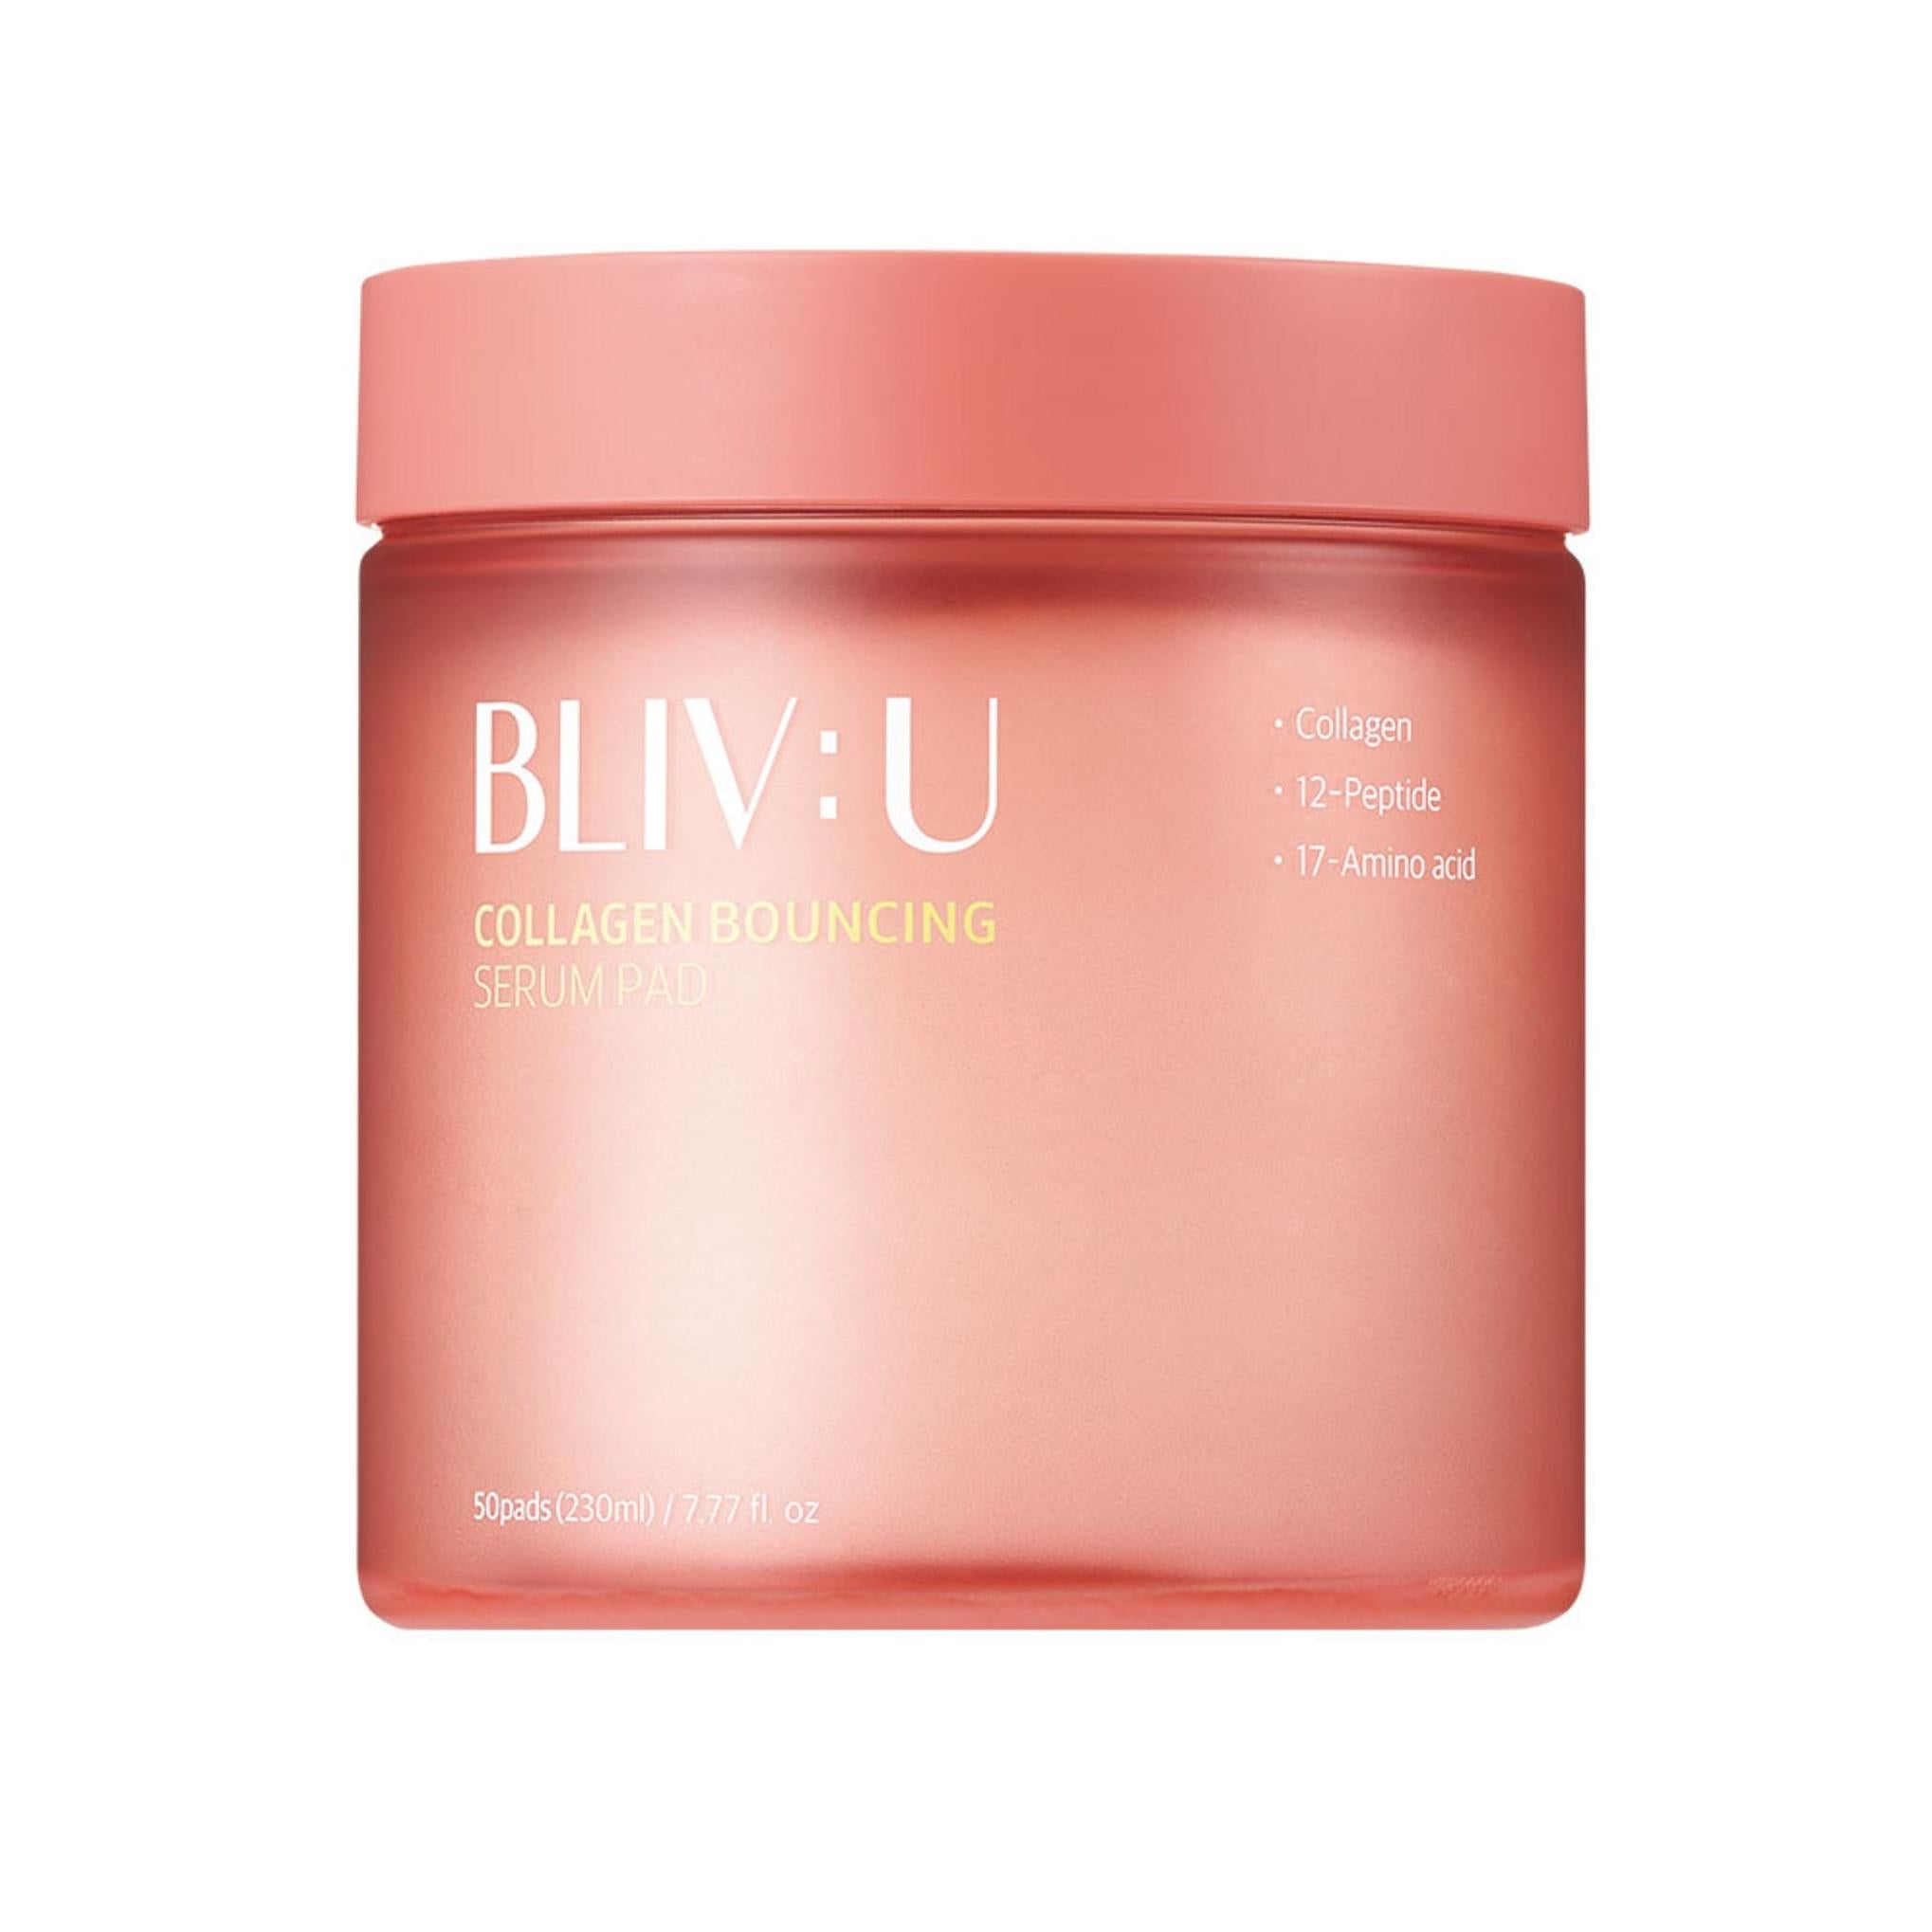 BliveU Collagen Bouncing Serum Pad 50p